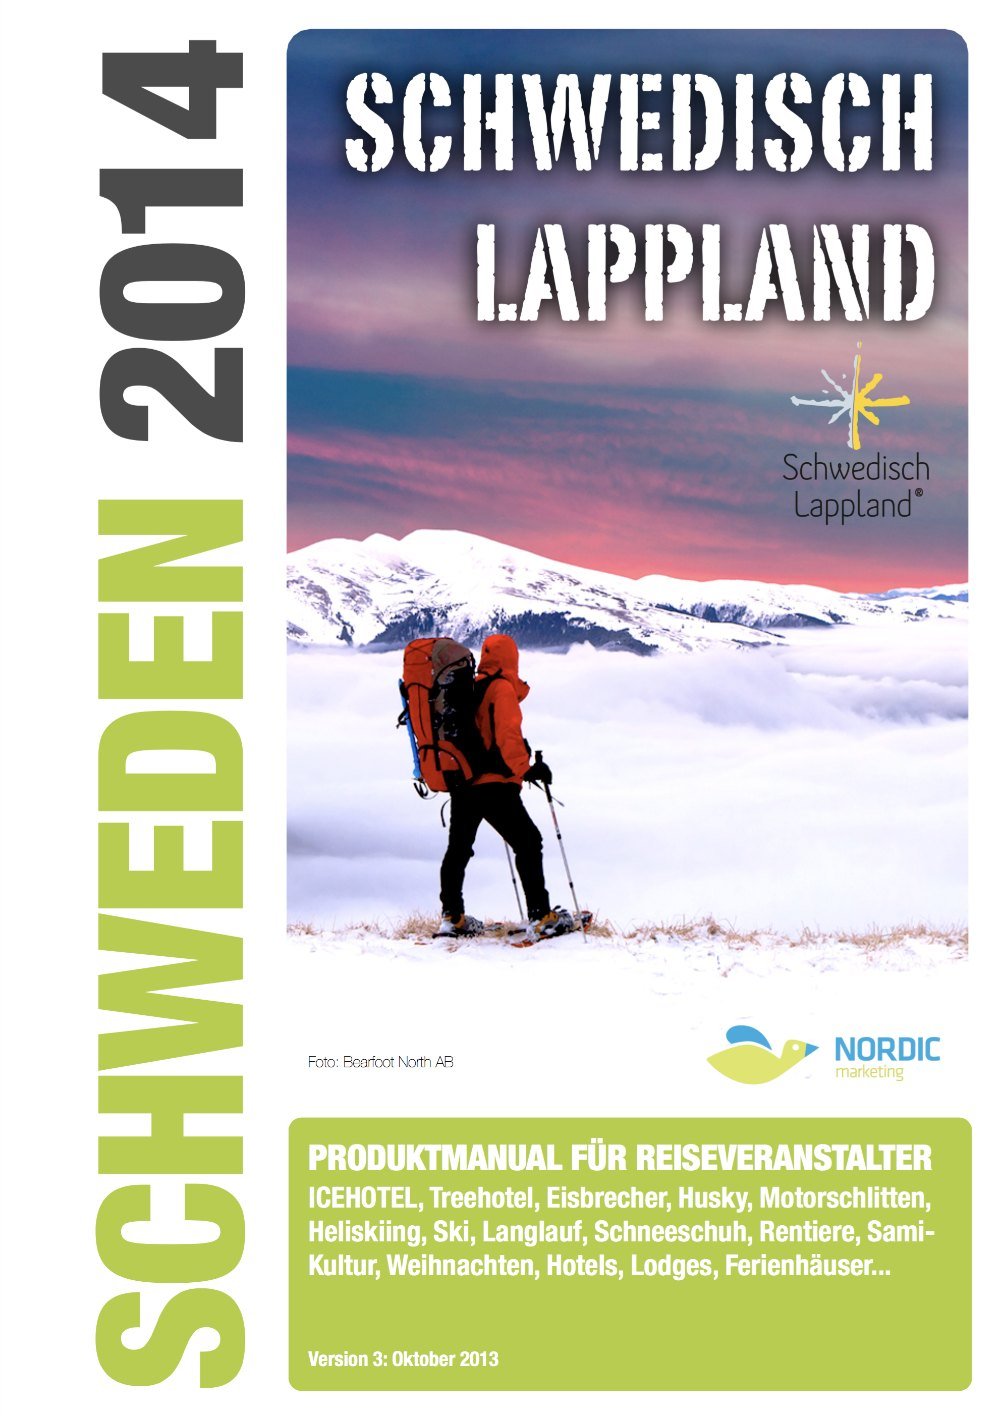 Schwedisch Lappland Winter Produktmanual Cover